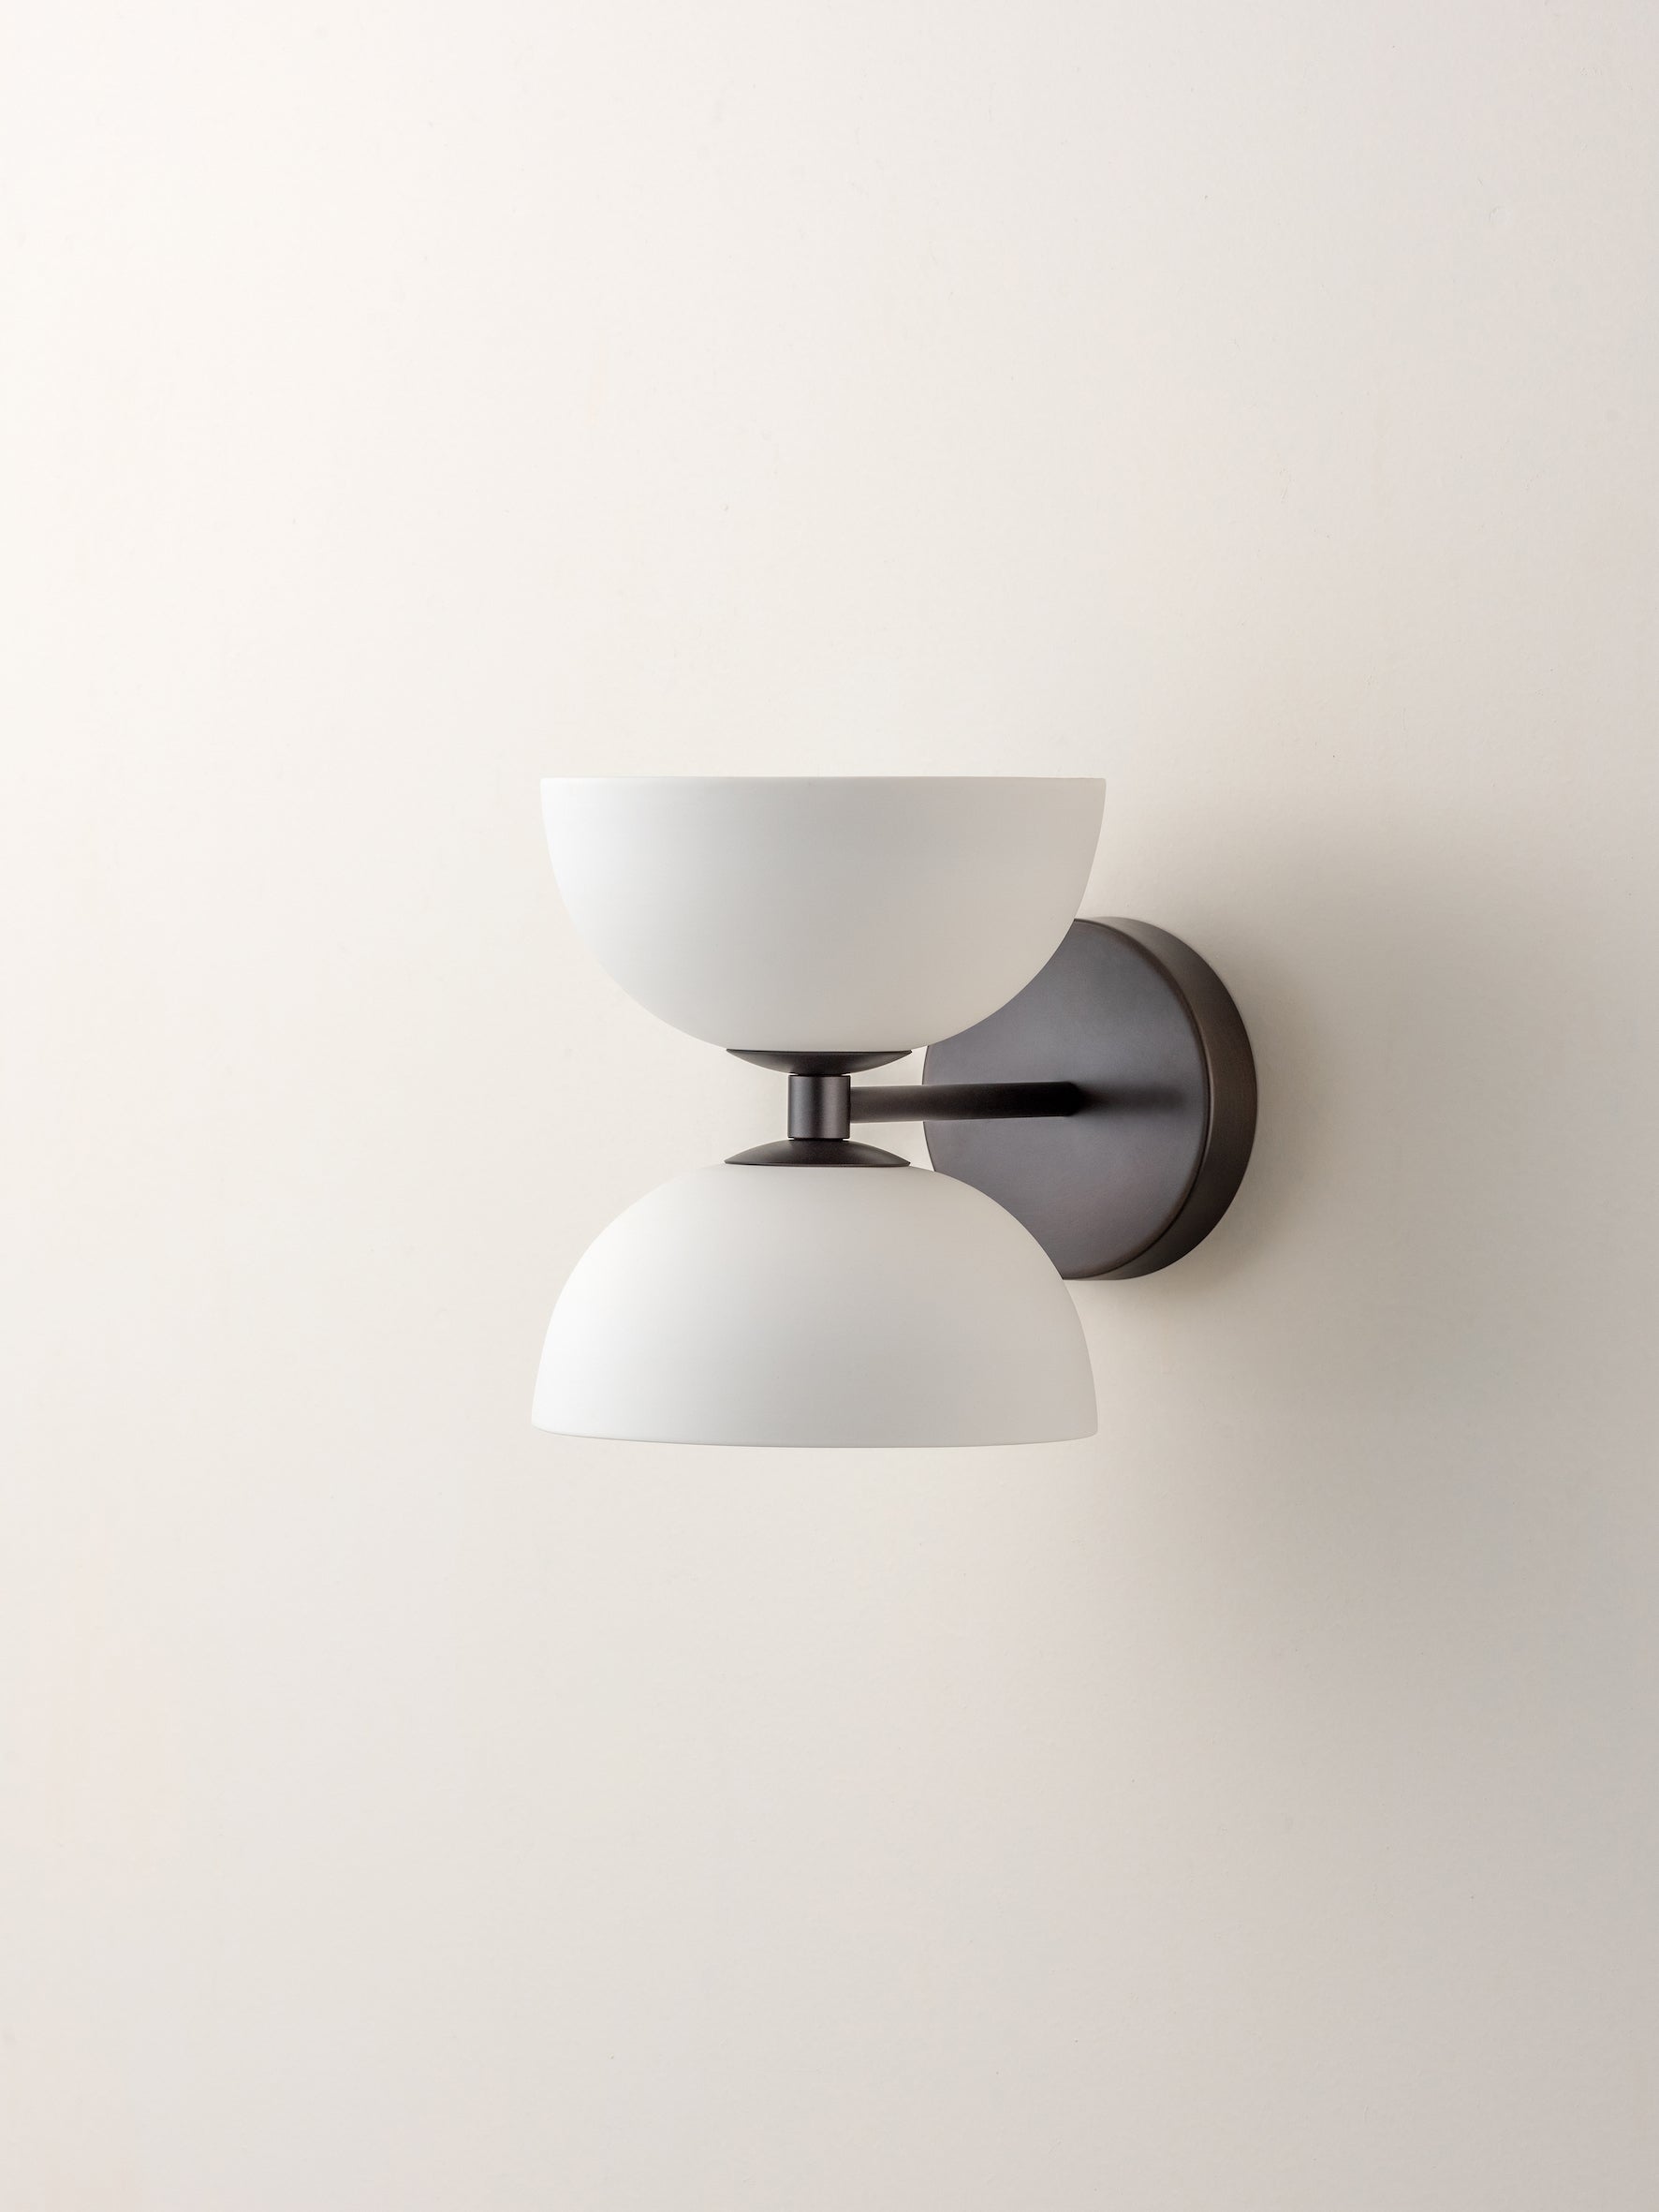 Ruzo - 2 light bronze and porcelain wall light | Wall Light | Lights & Lamps Inc | Modern Affordable Designer Lighting | USA